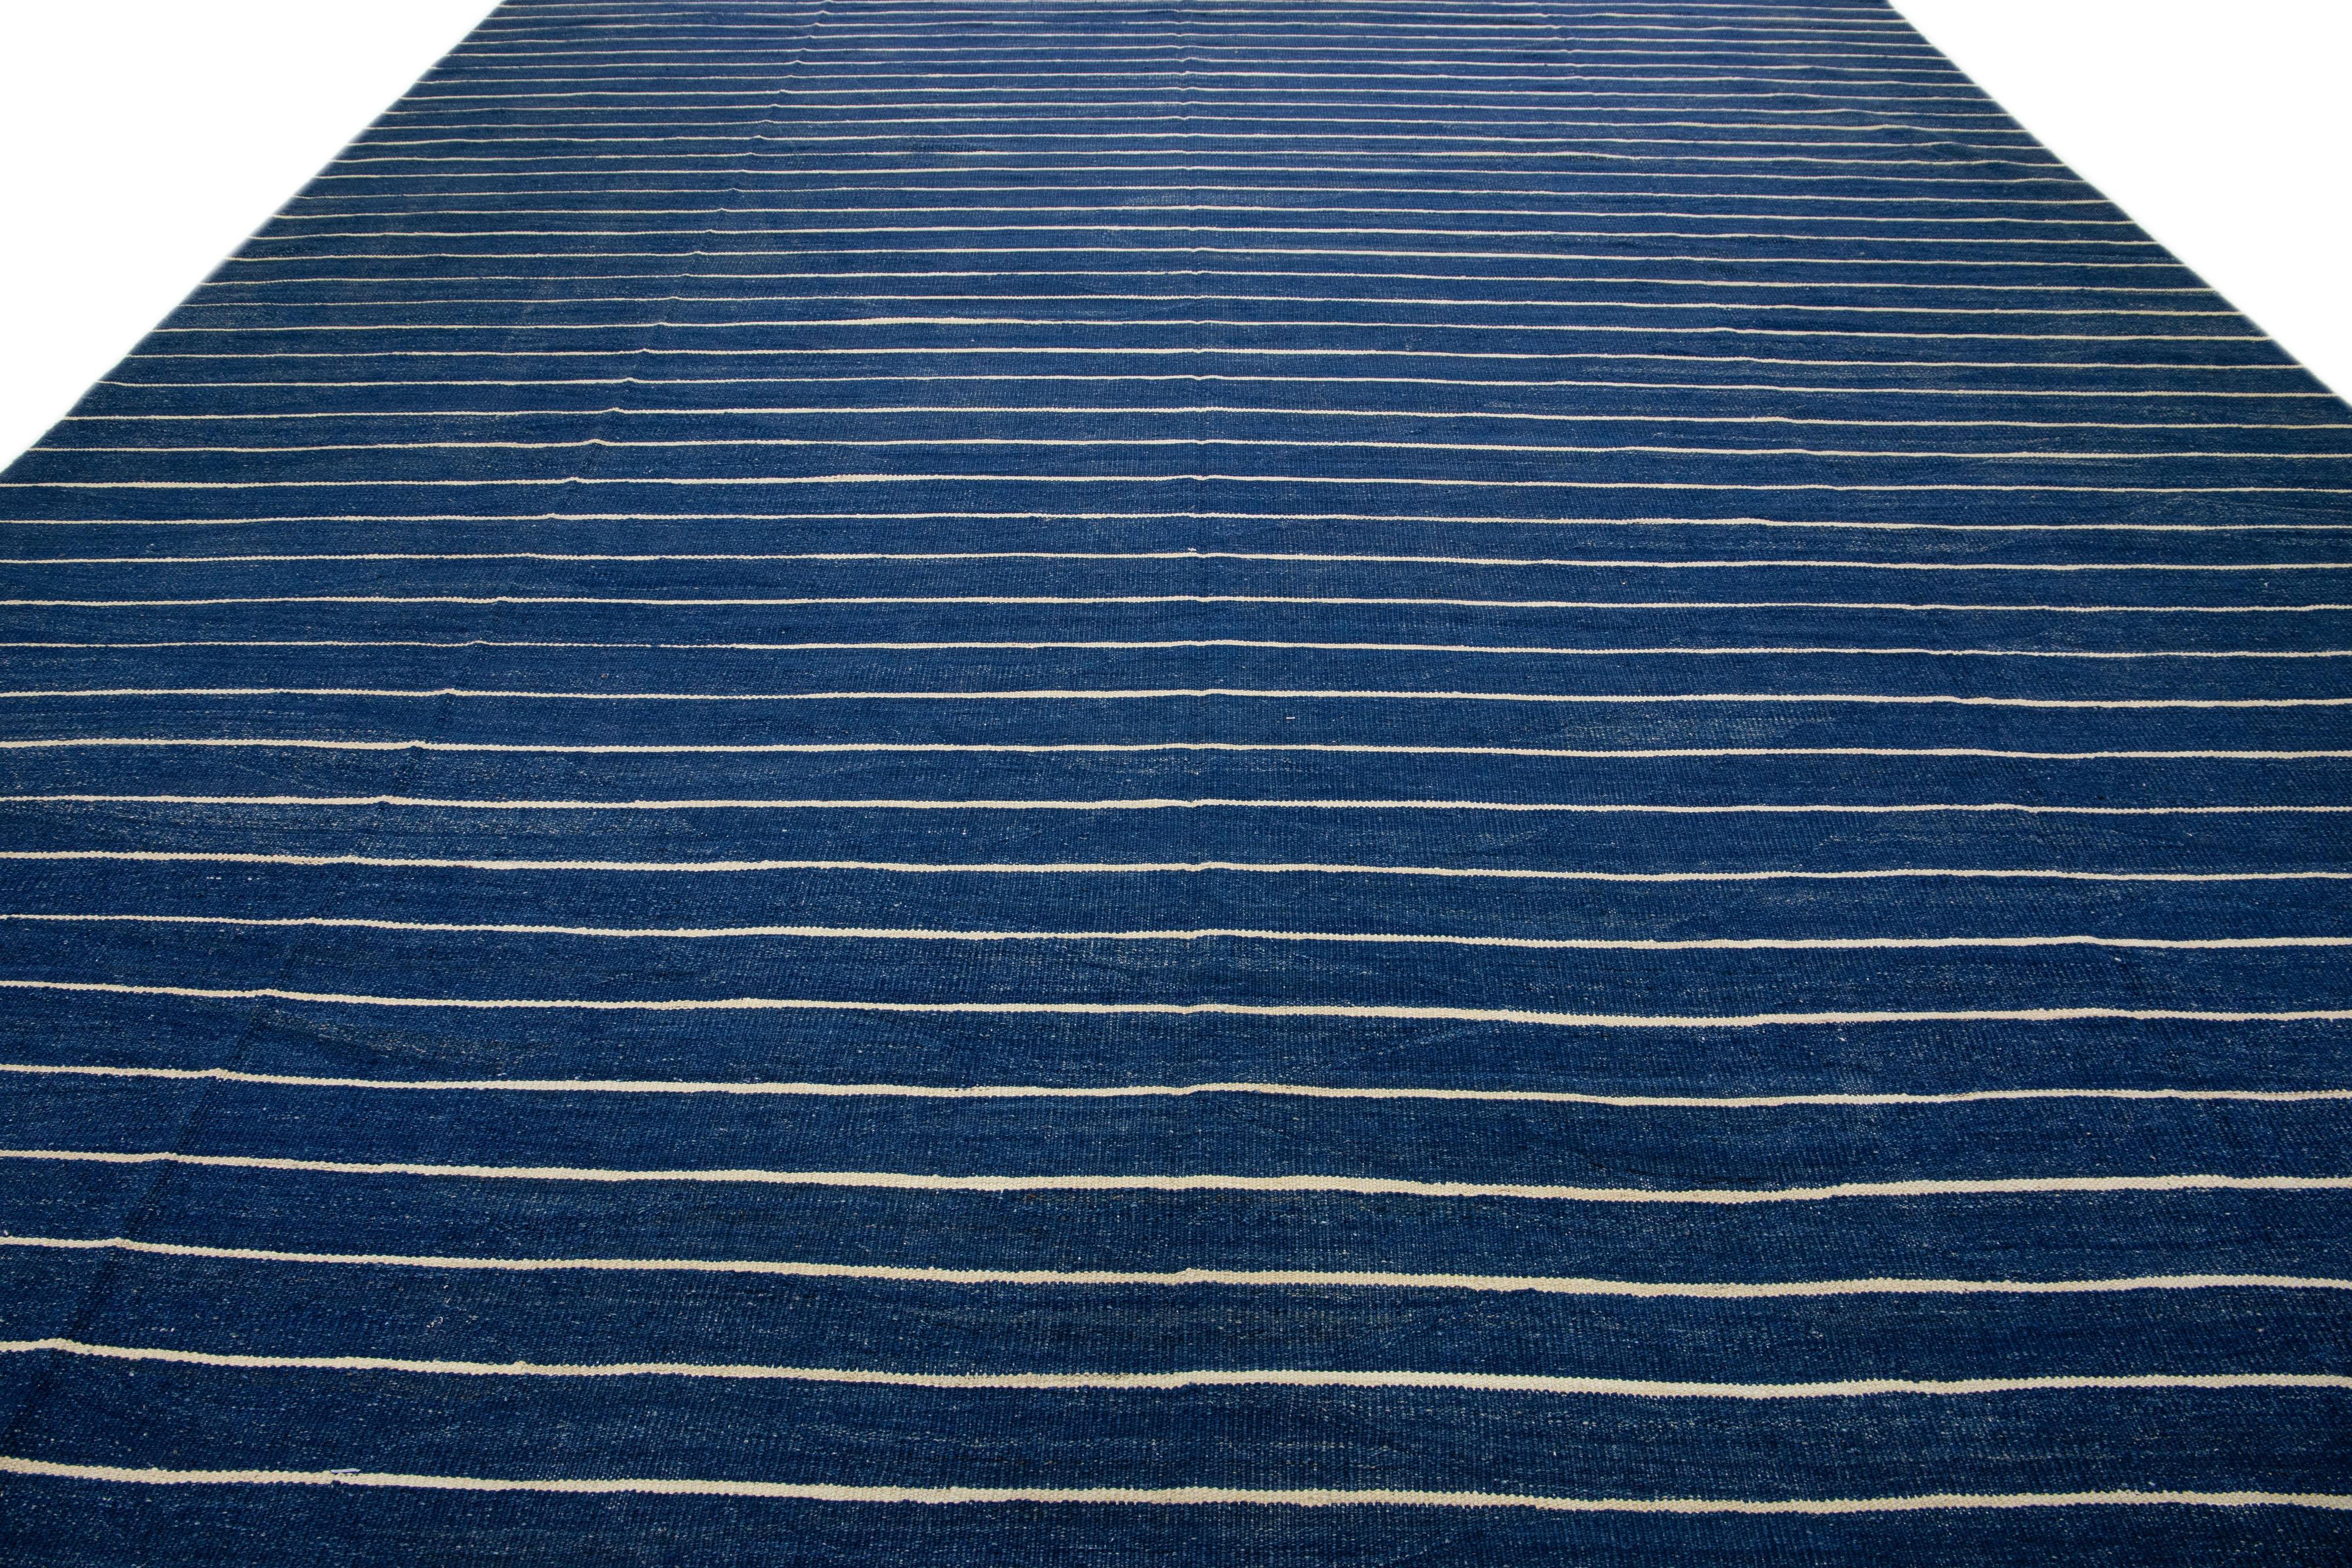 Afghan Modern Kilim Flat-Weave Navy Blue Oversize Wool Rug with Stripe Pattern For Sale